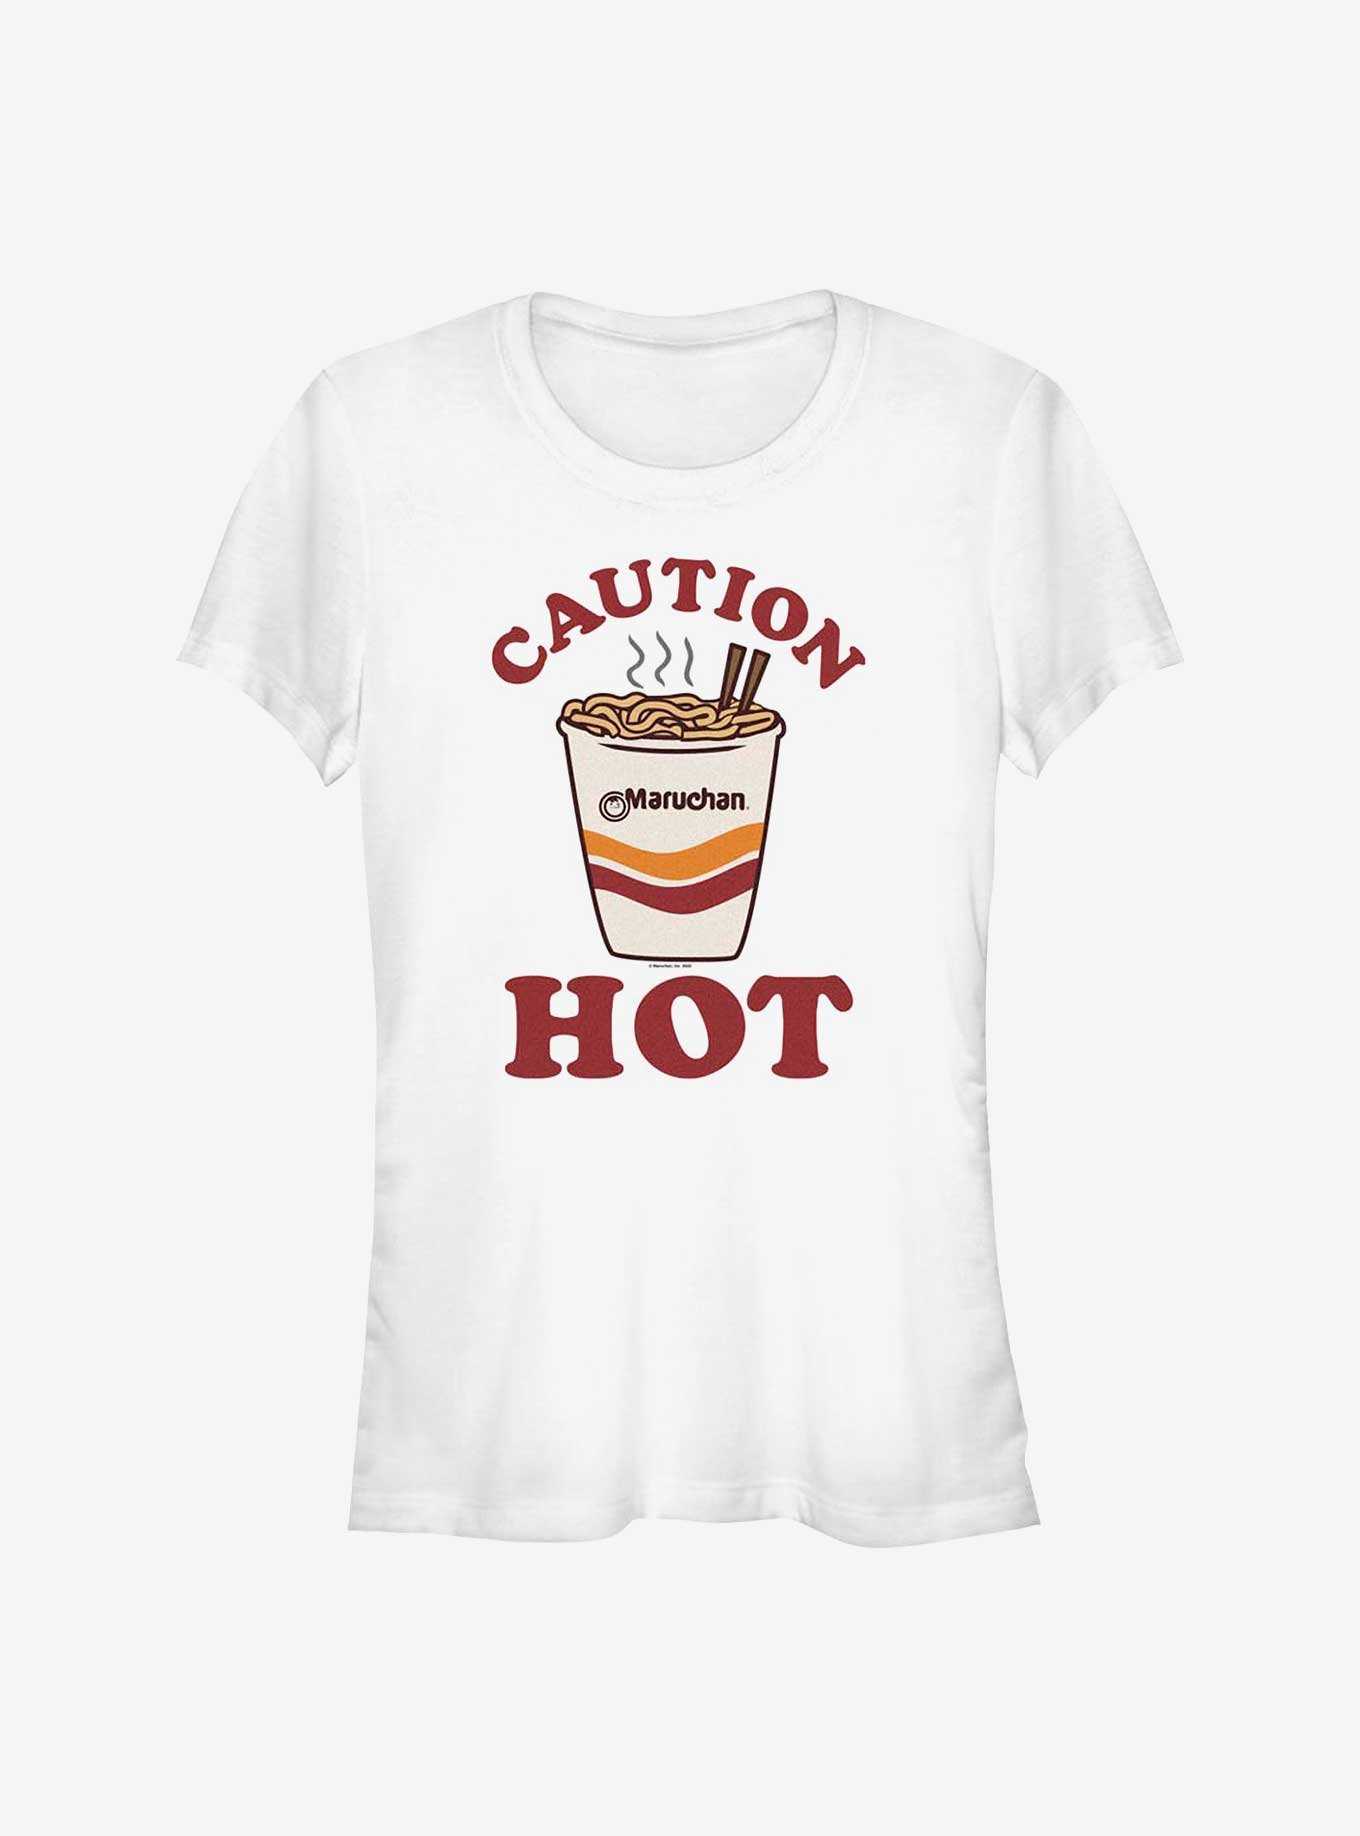 Maruchan Caution Hot Girls T-Shirt, , hi-res